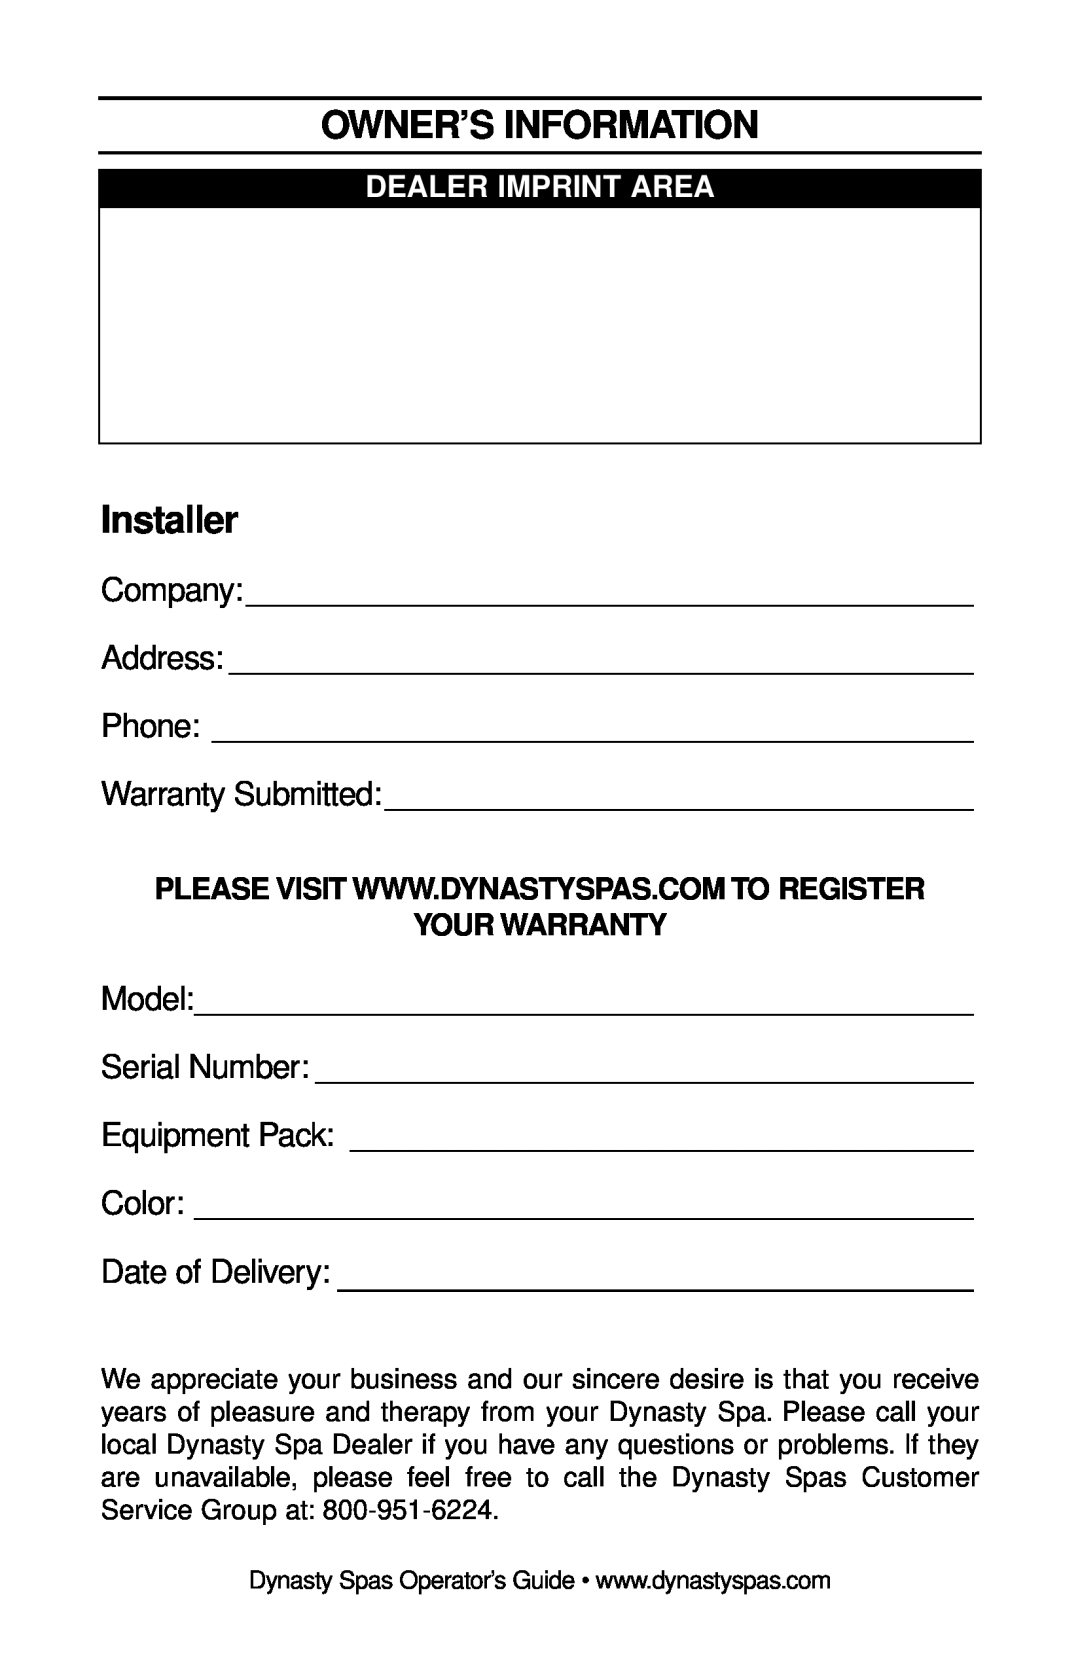 Dynasty Spas 2007 manual Owner’S Information, Installer, Date of Delivery 